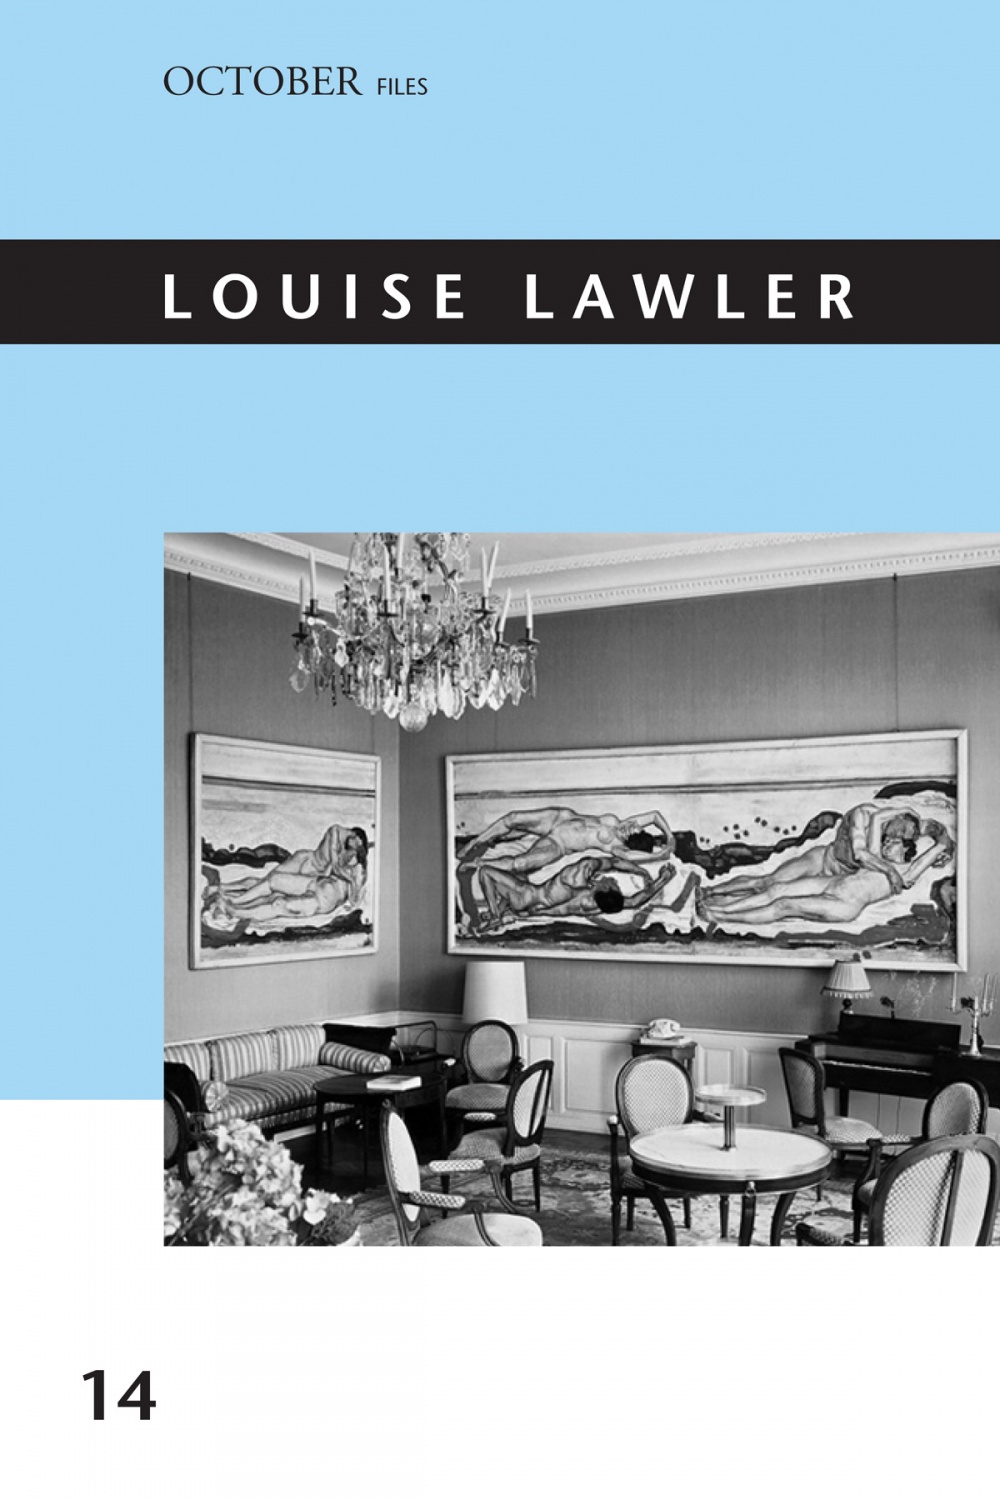 Louise Lawler (October Files)